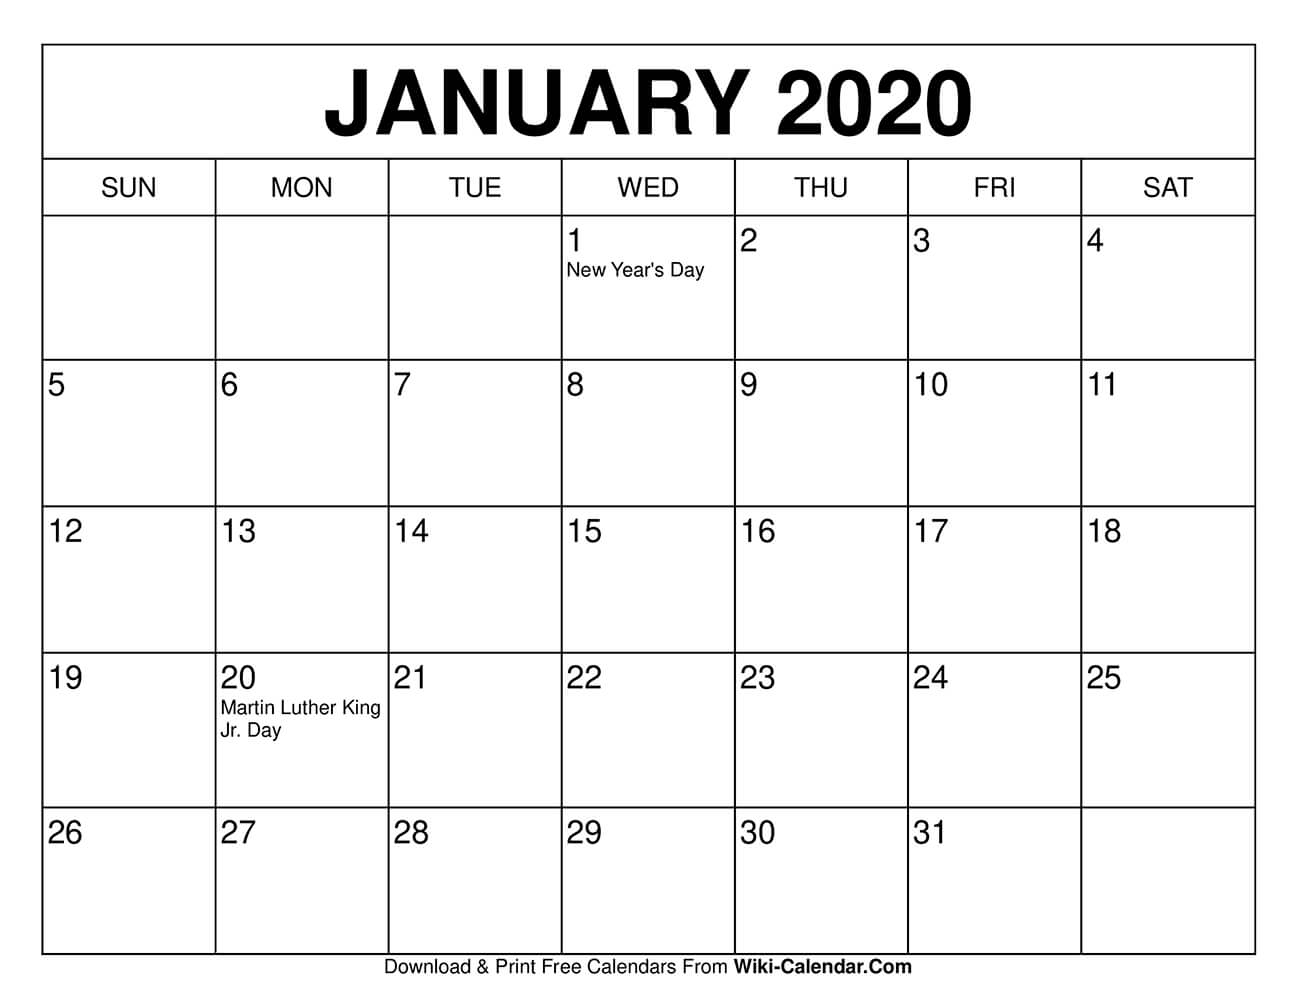 Free Printable January 2020 Calendars Wiki Calendar